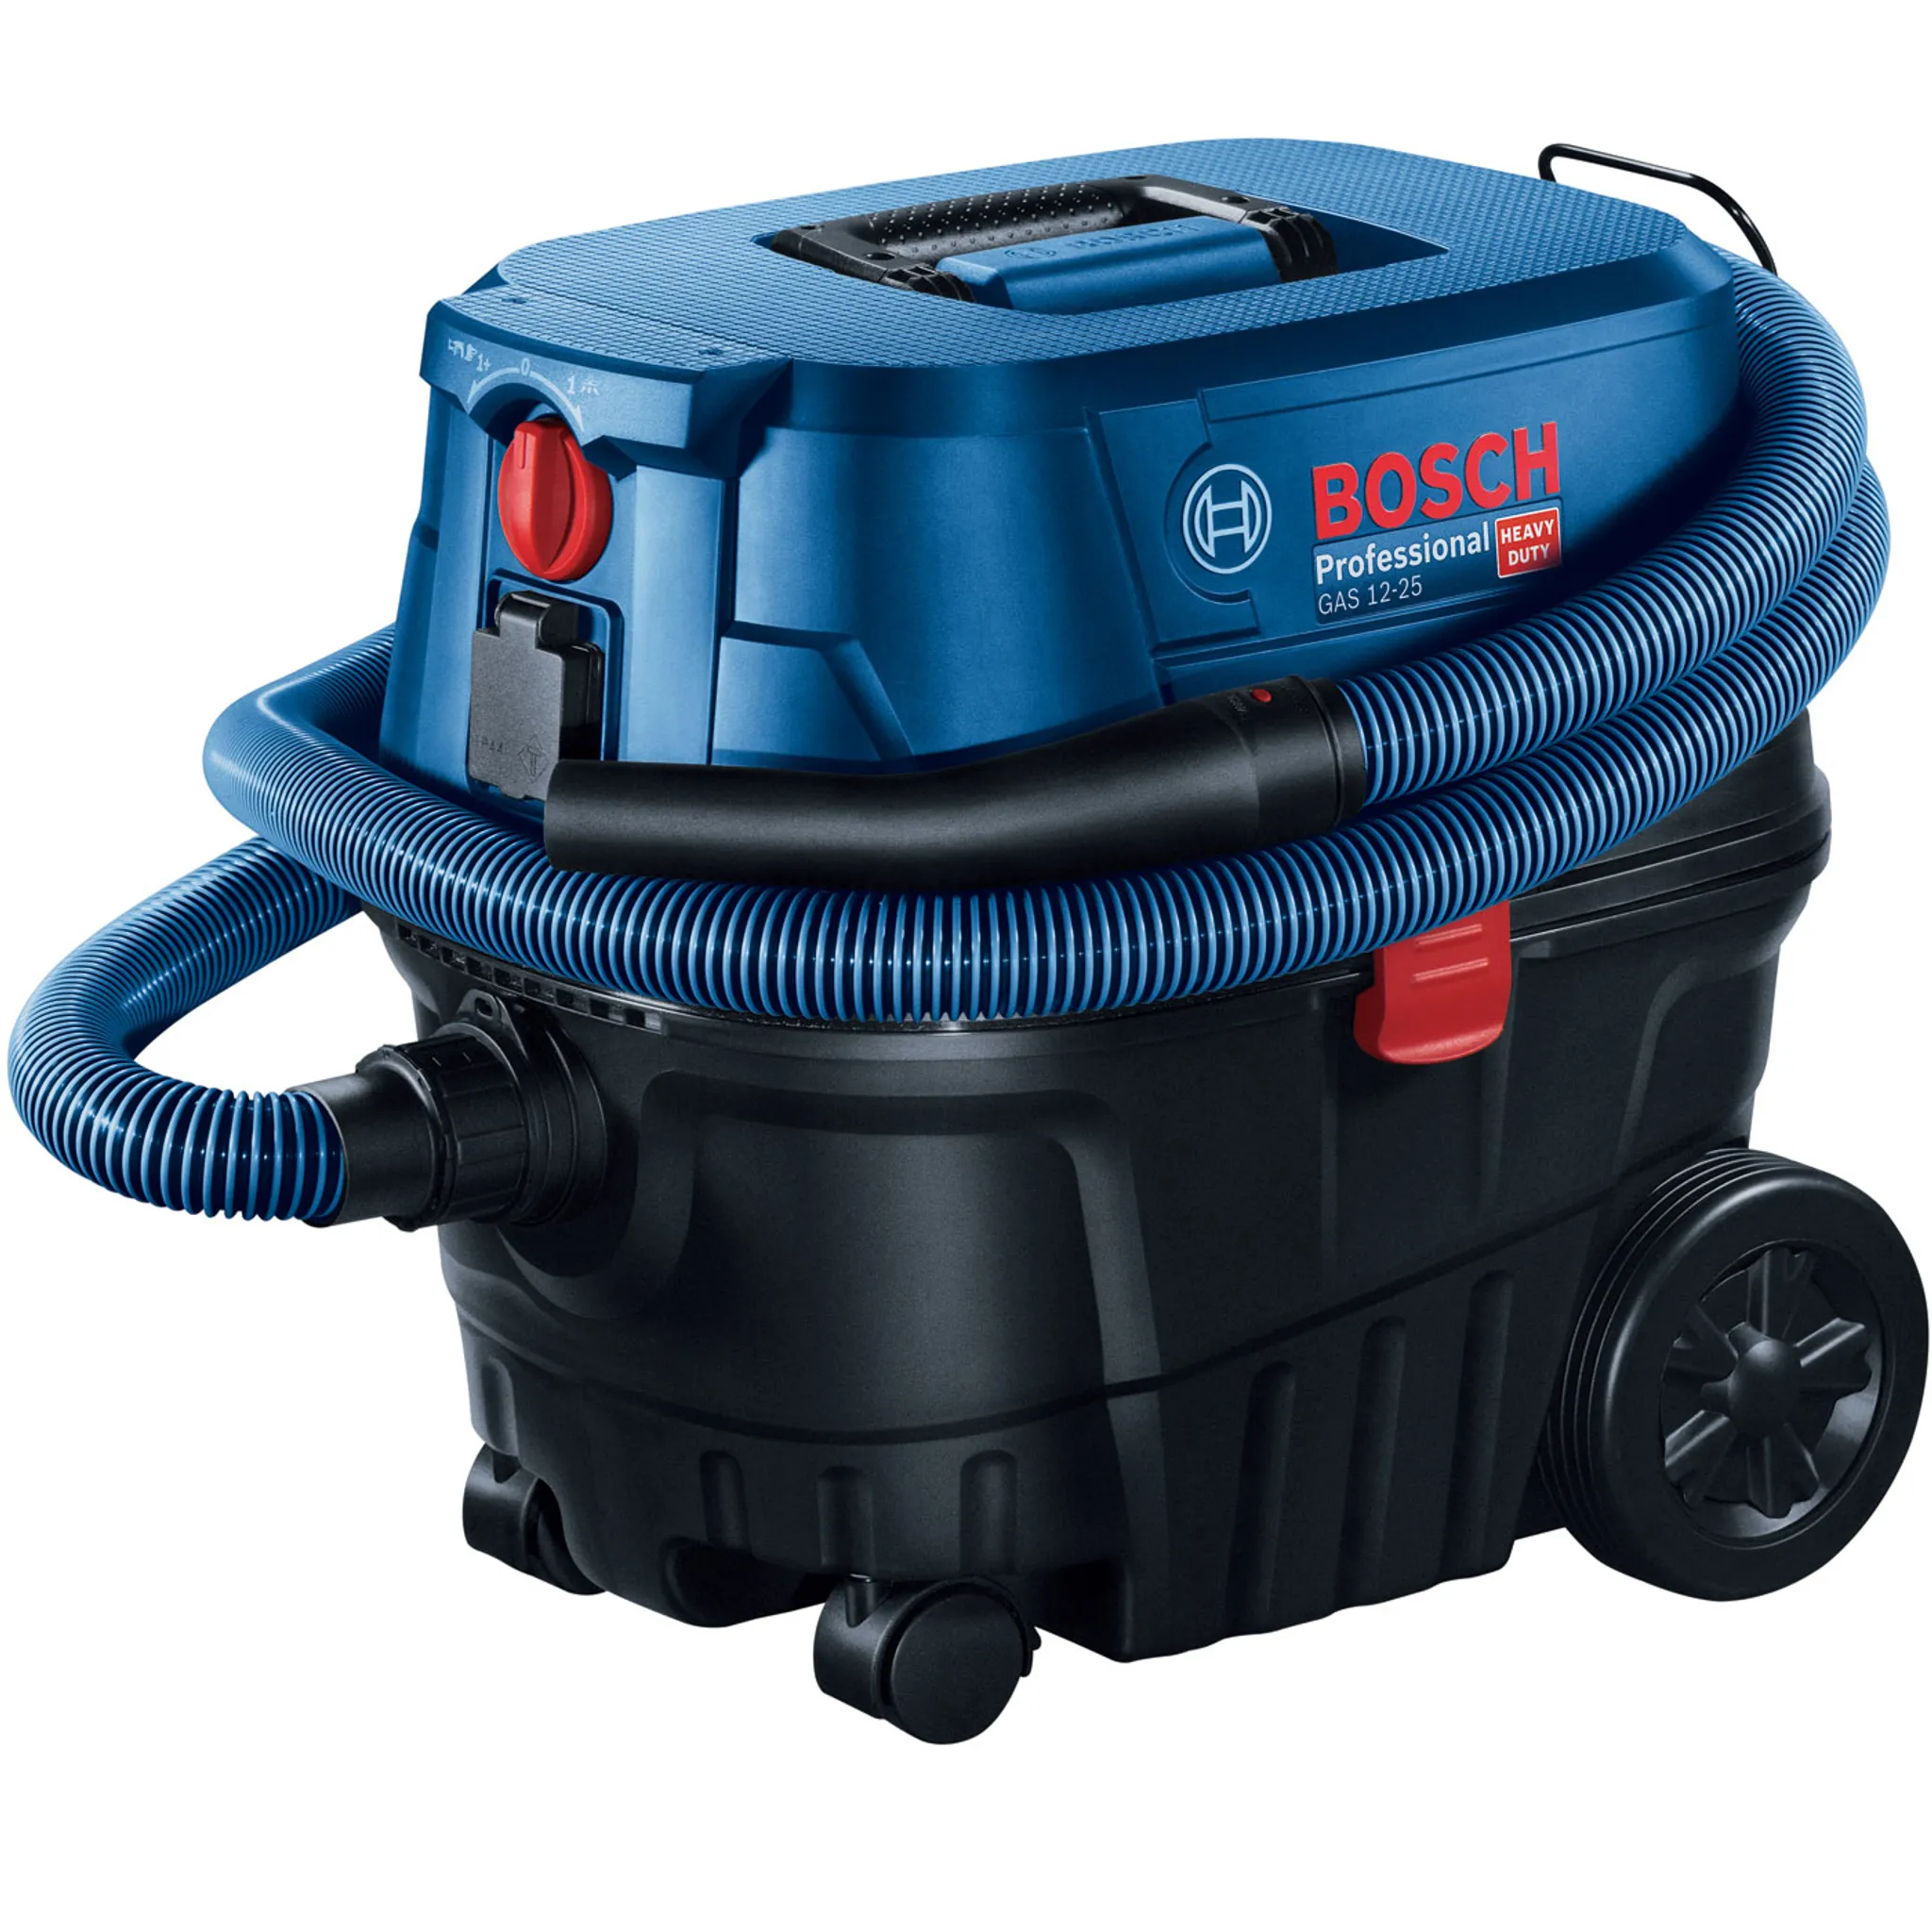 12-25 PL Professional Bosch GAS